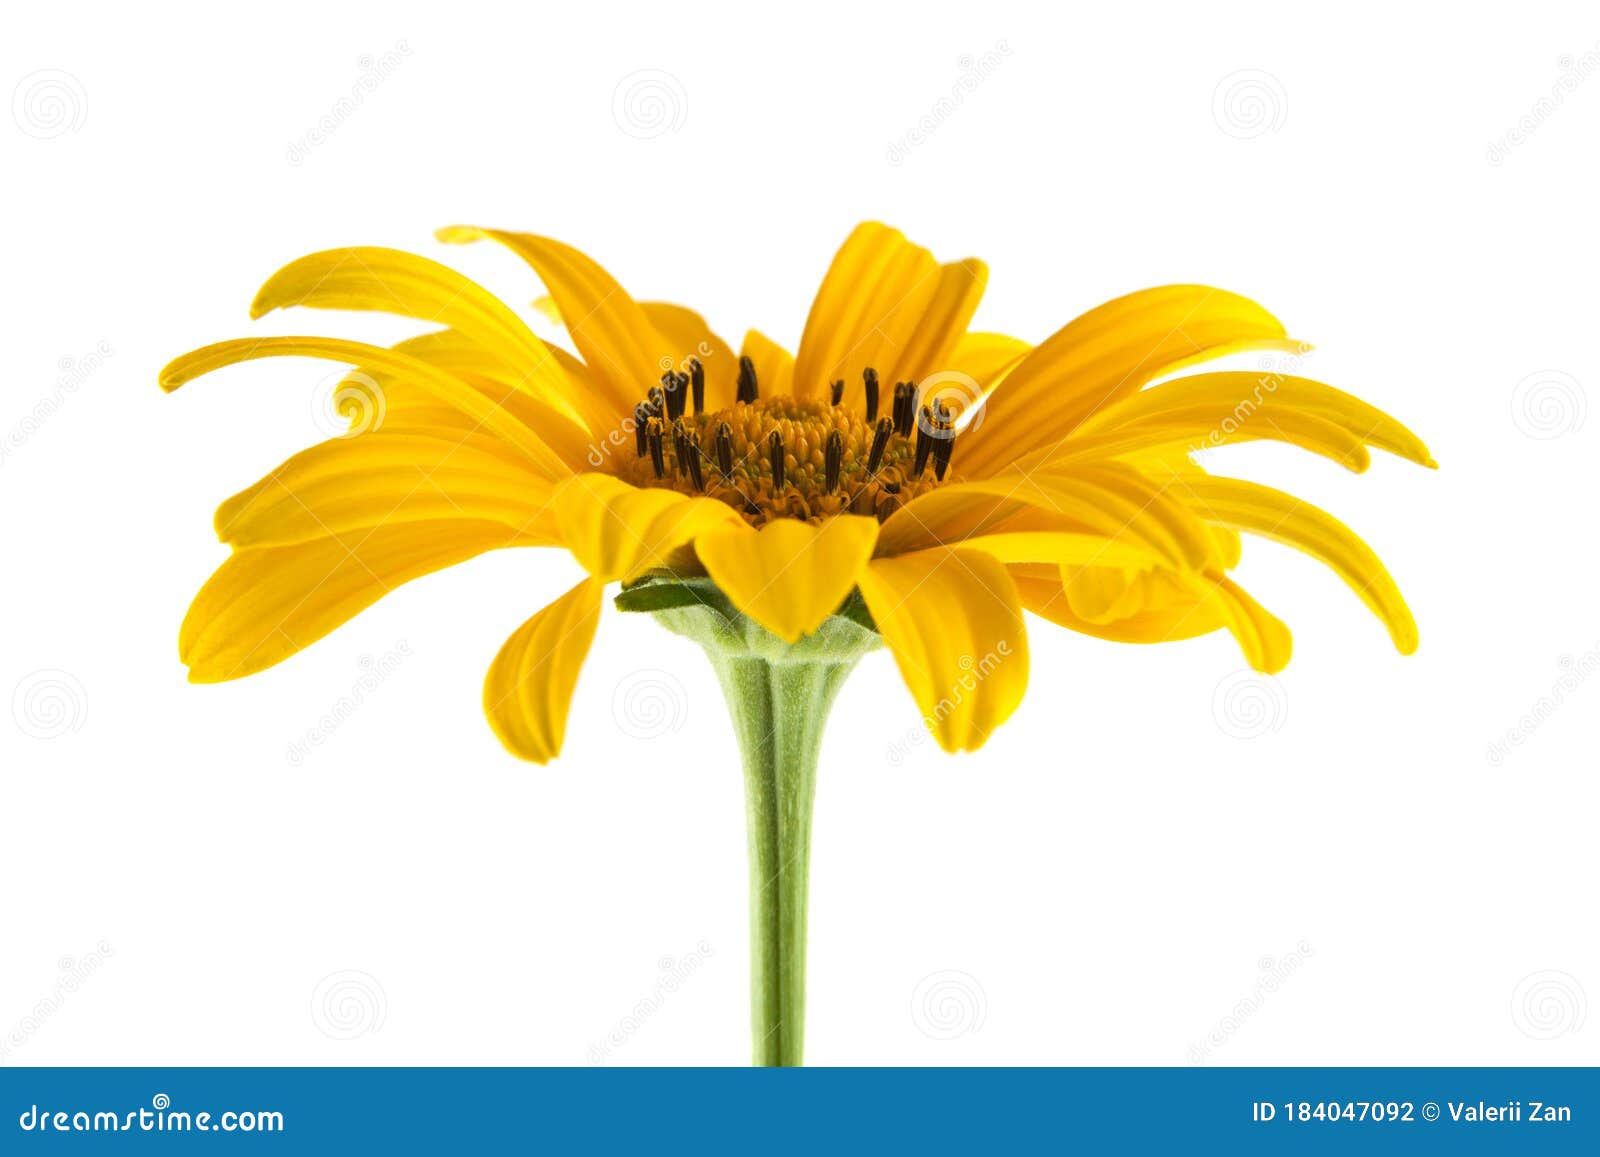 Yellow Flowers Isolated on White Background Stock Photo - Image of